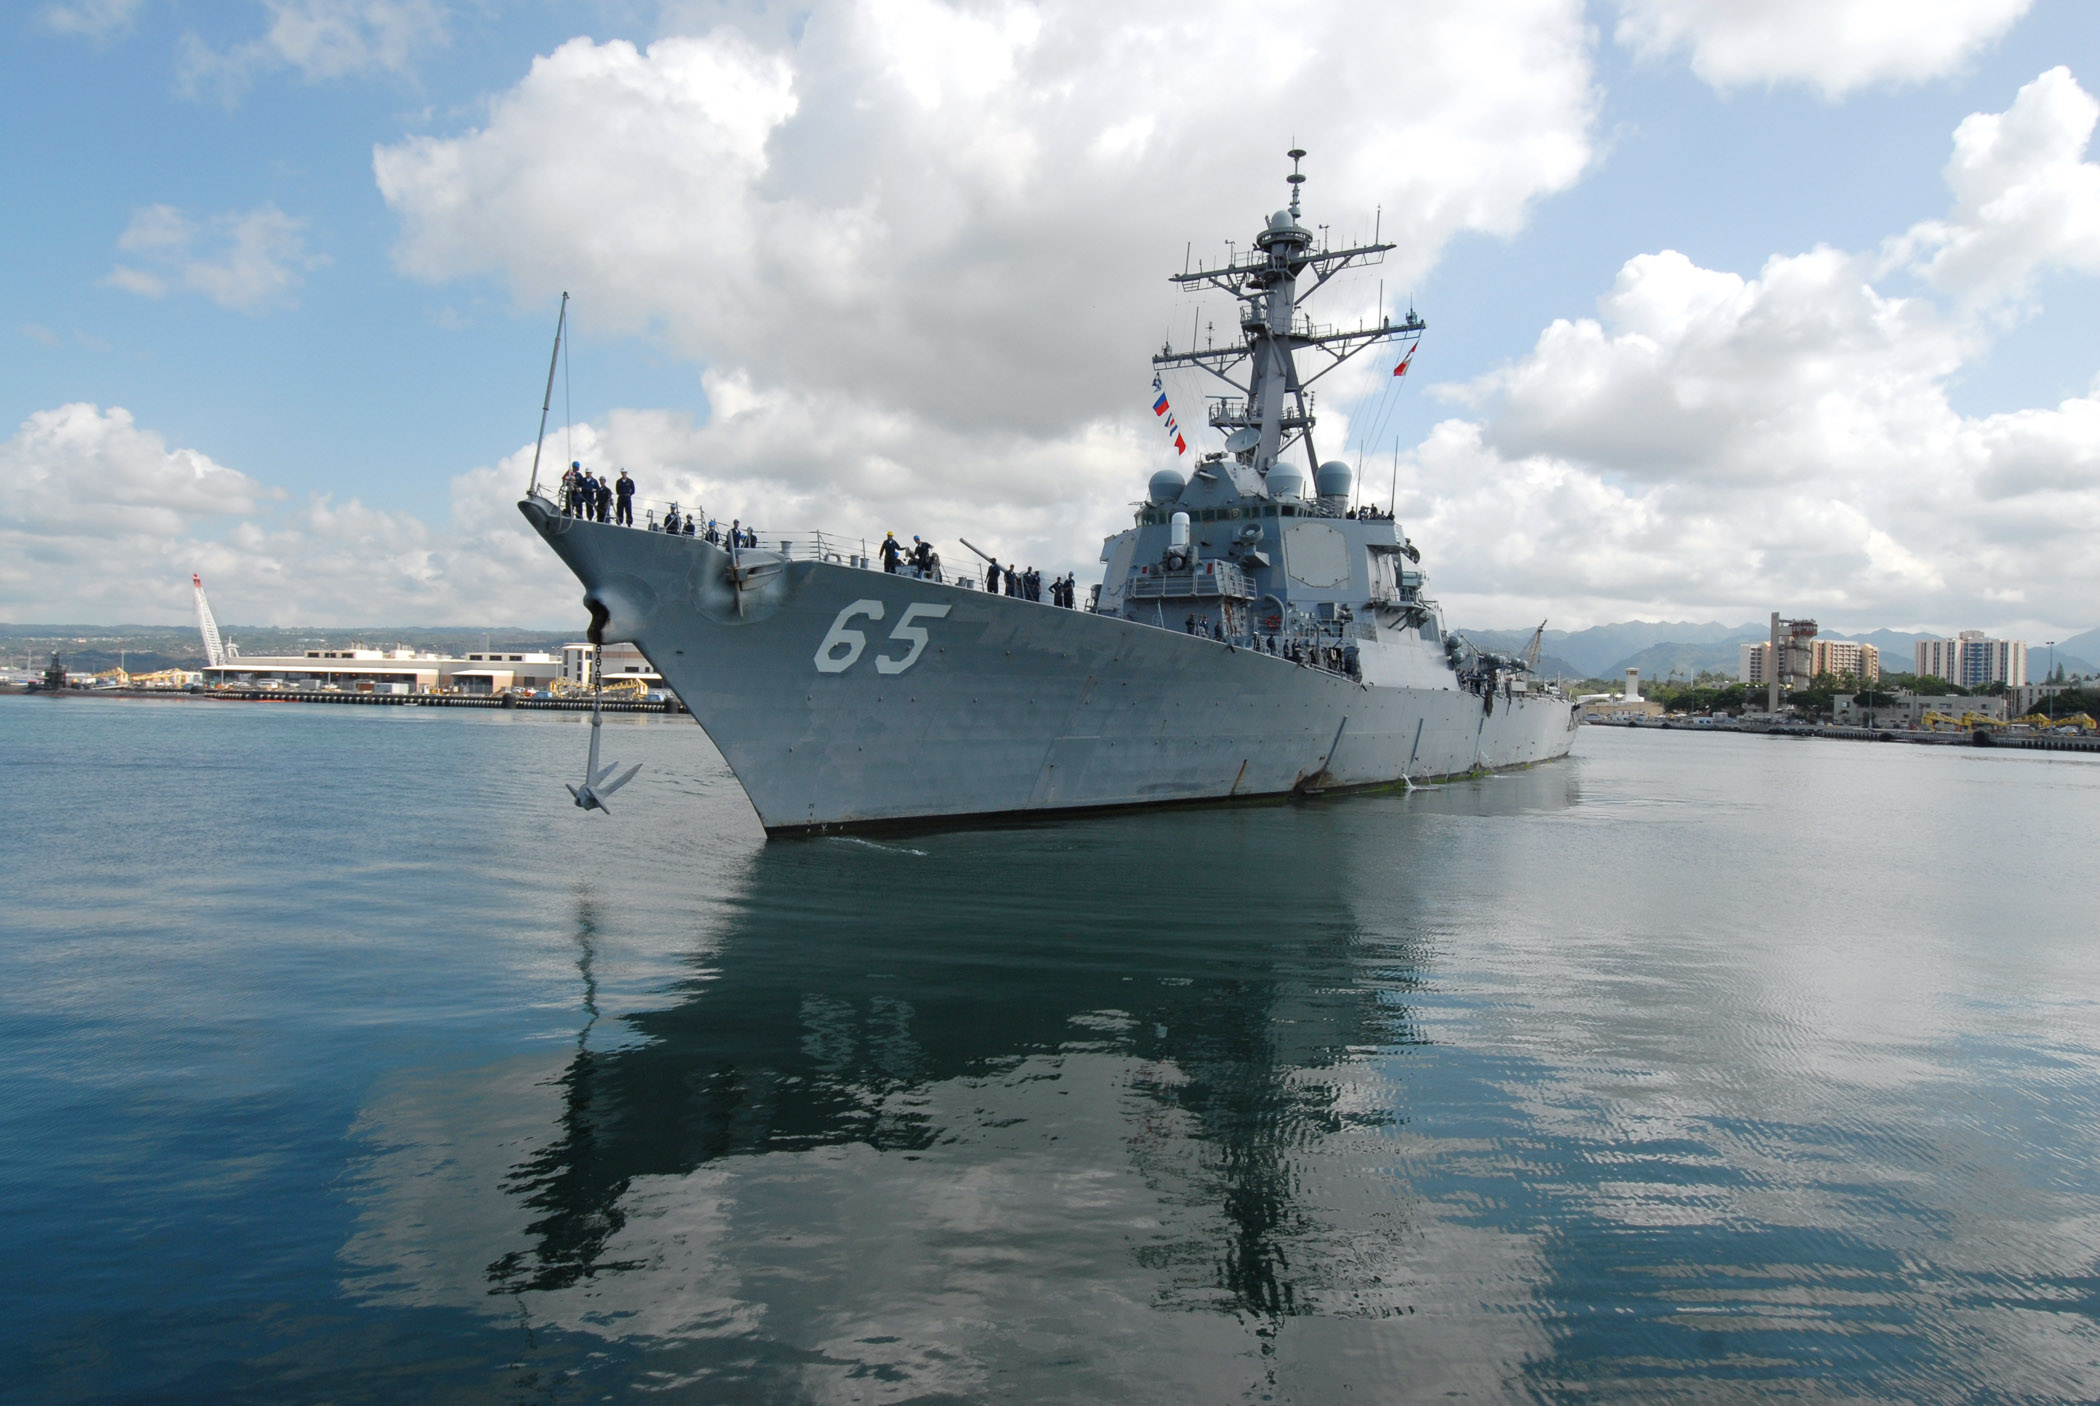 US_Navy_070304-N-4965F-018_Guided_missile_destroyer_USS_Benfold_(DDG_65)_maneuvers_as_she_prepares_to_moor_pierside_Naval_Station_Pearl_Harbor.jpg